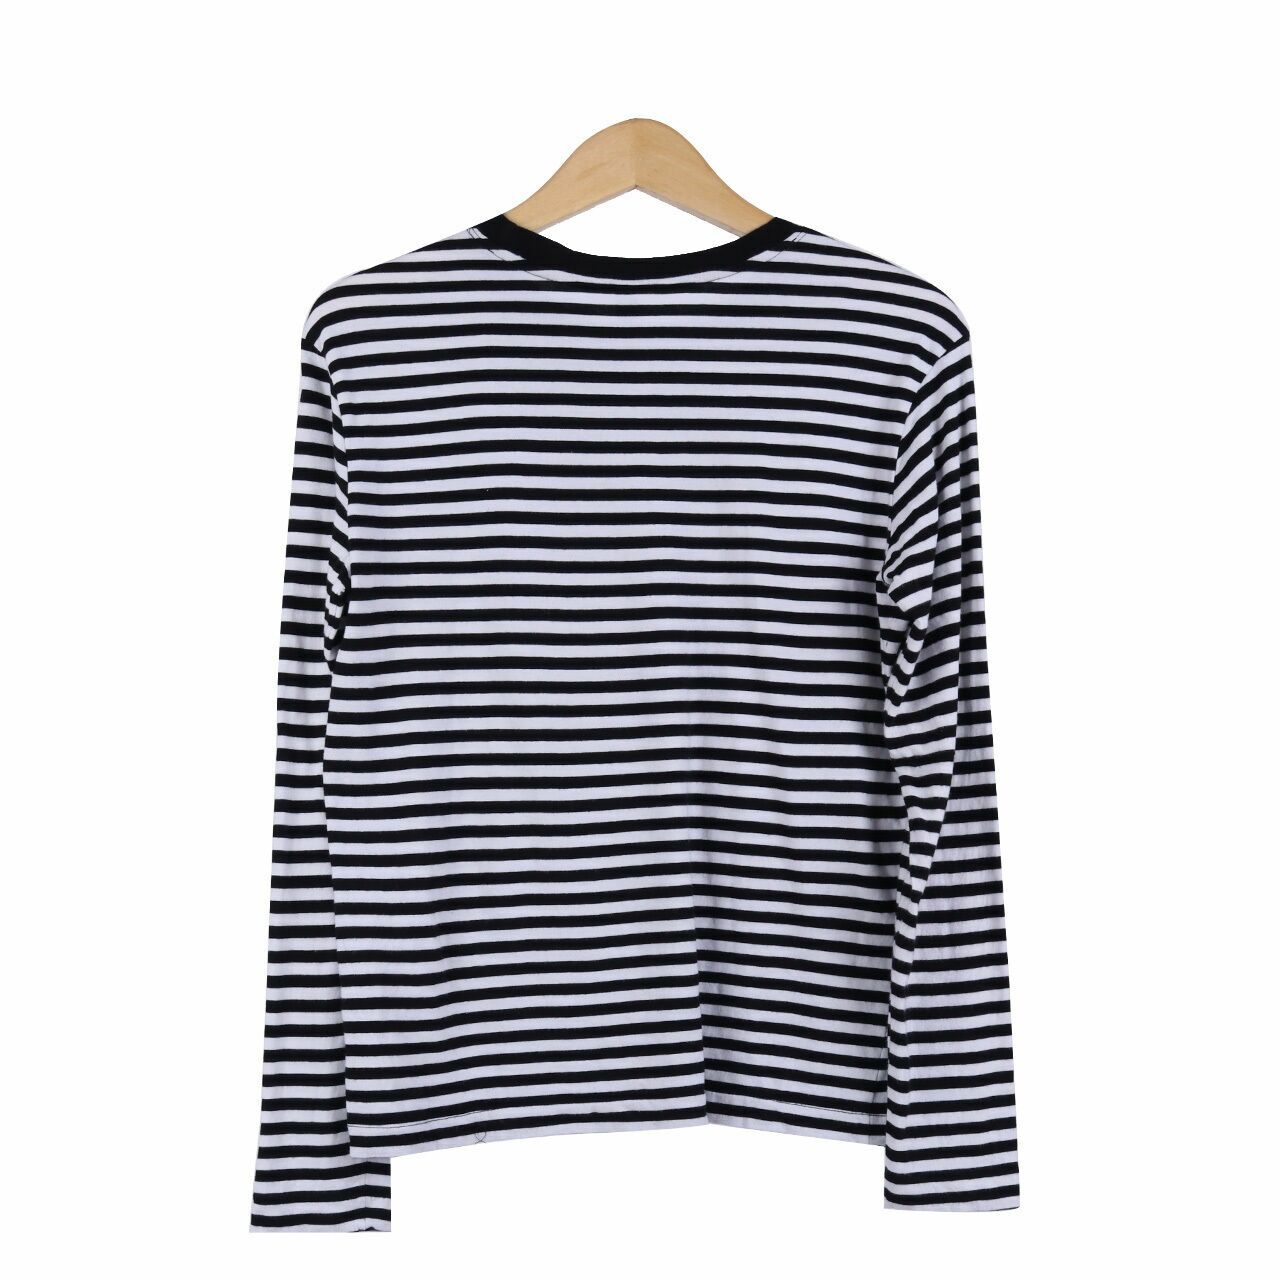 H&M Black & White Stripes Long Sleeve Shirt